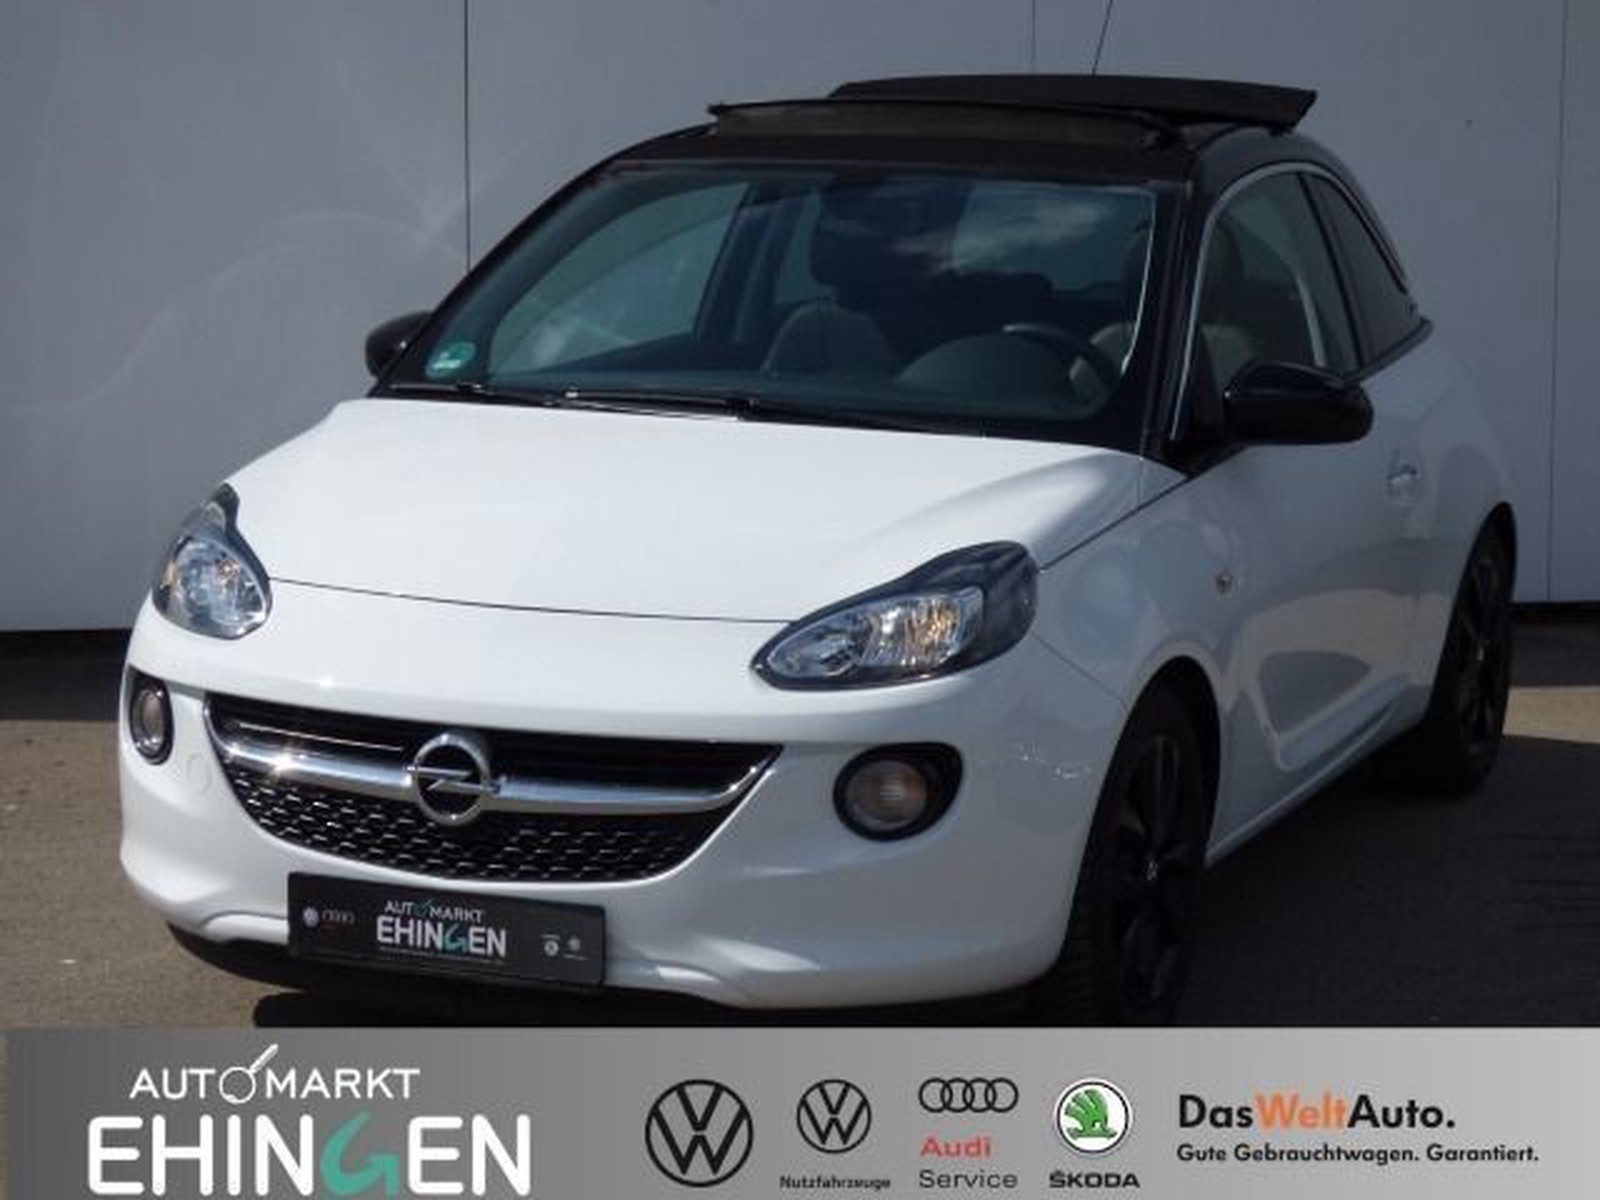 Opel Adam Open Air 120 Jahre+Faltdach+Klima+Alu+Winterpaket+PDC+Tempomat+  gebraucht kaufen in Ehingen Preis 13222 eur - Int.Nr.: PUH/ADAM VERKAUFT